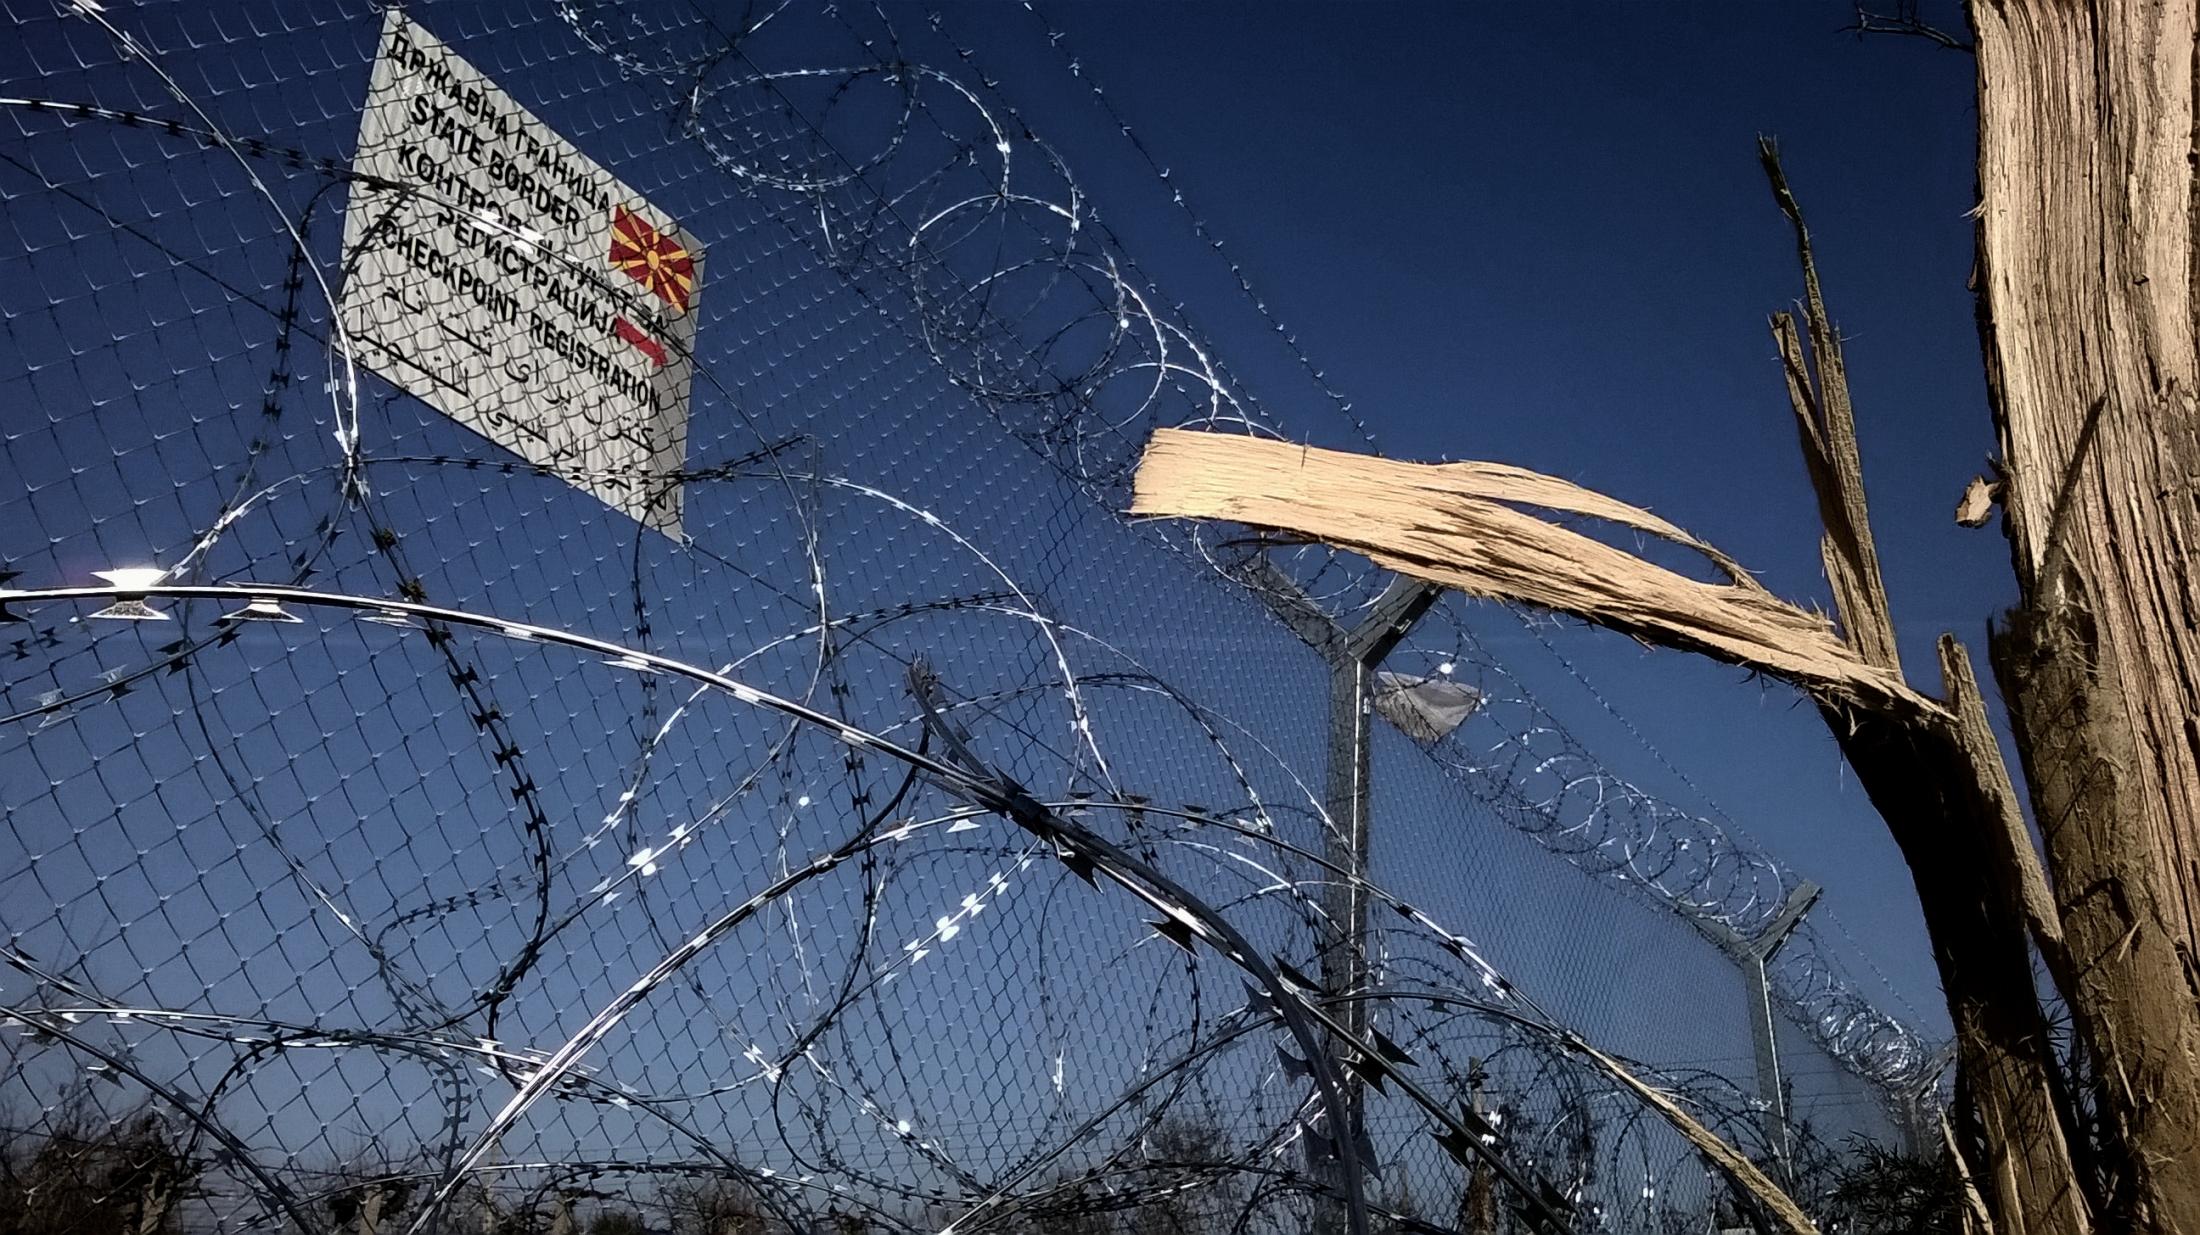 Faction border - Borders and distruction beetween Greece and Macedonia